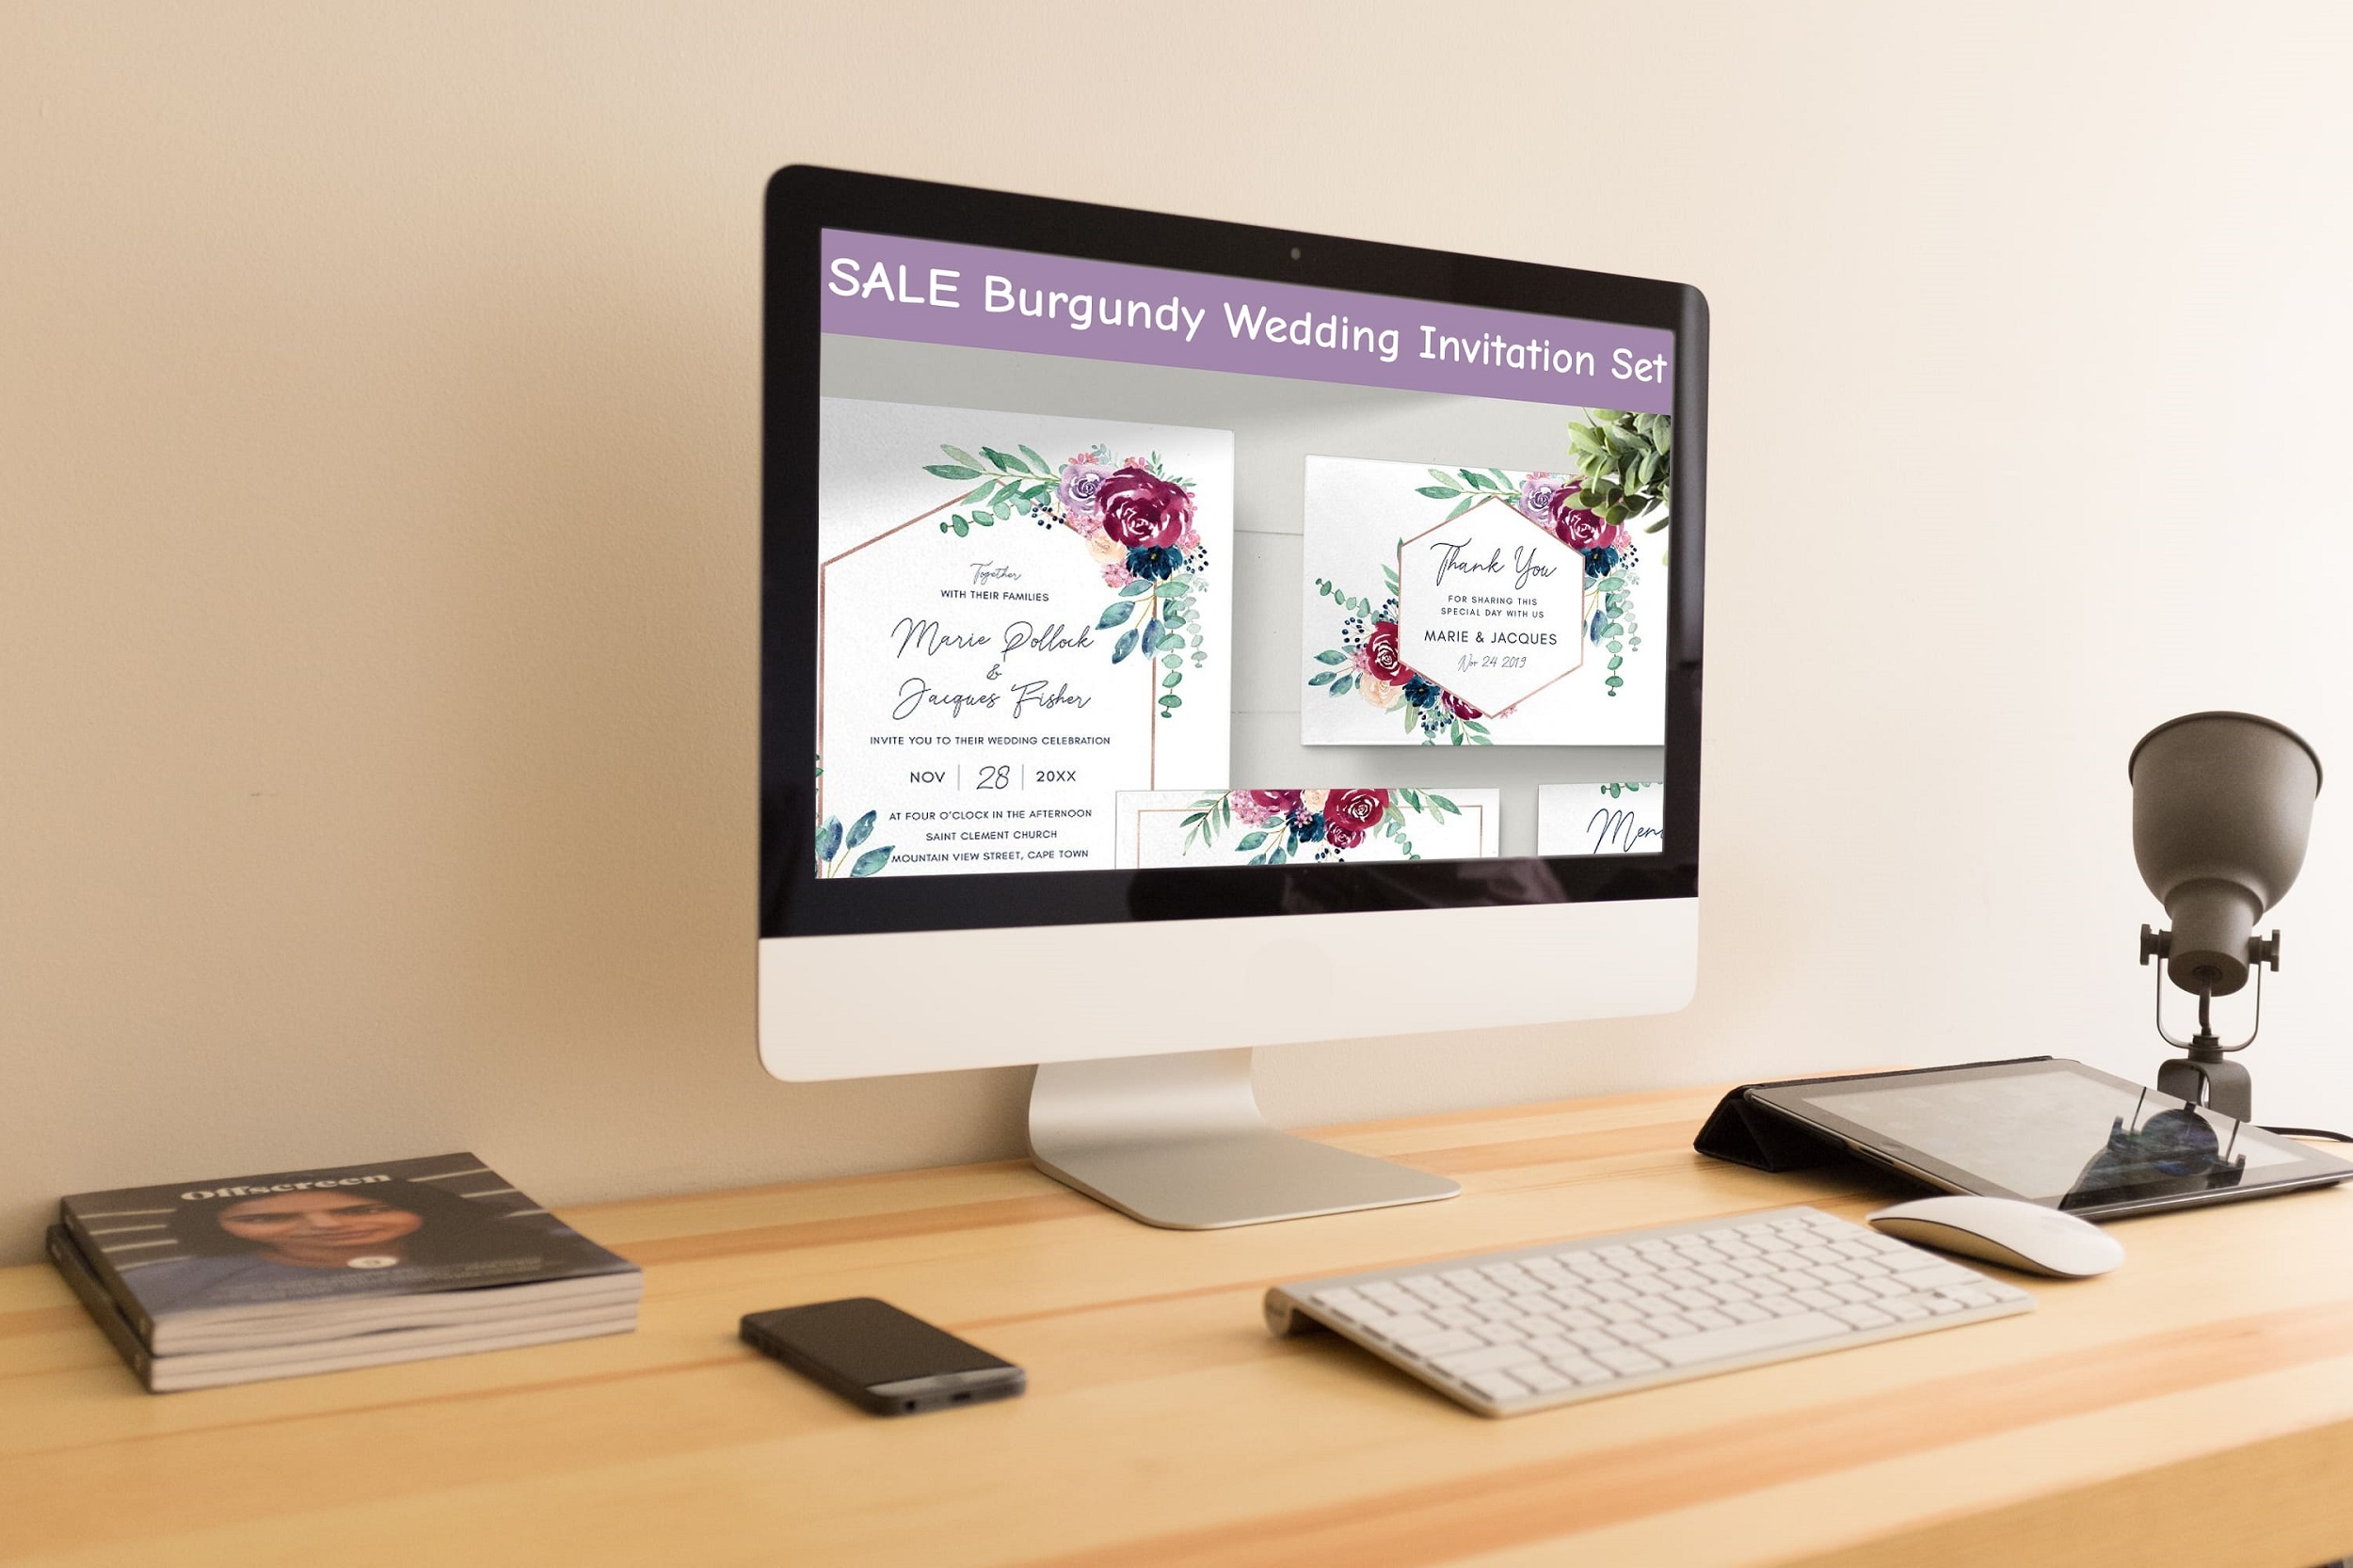 SALE Burgundy Wedding Invitation Set desktop mockup.